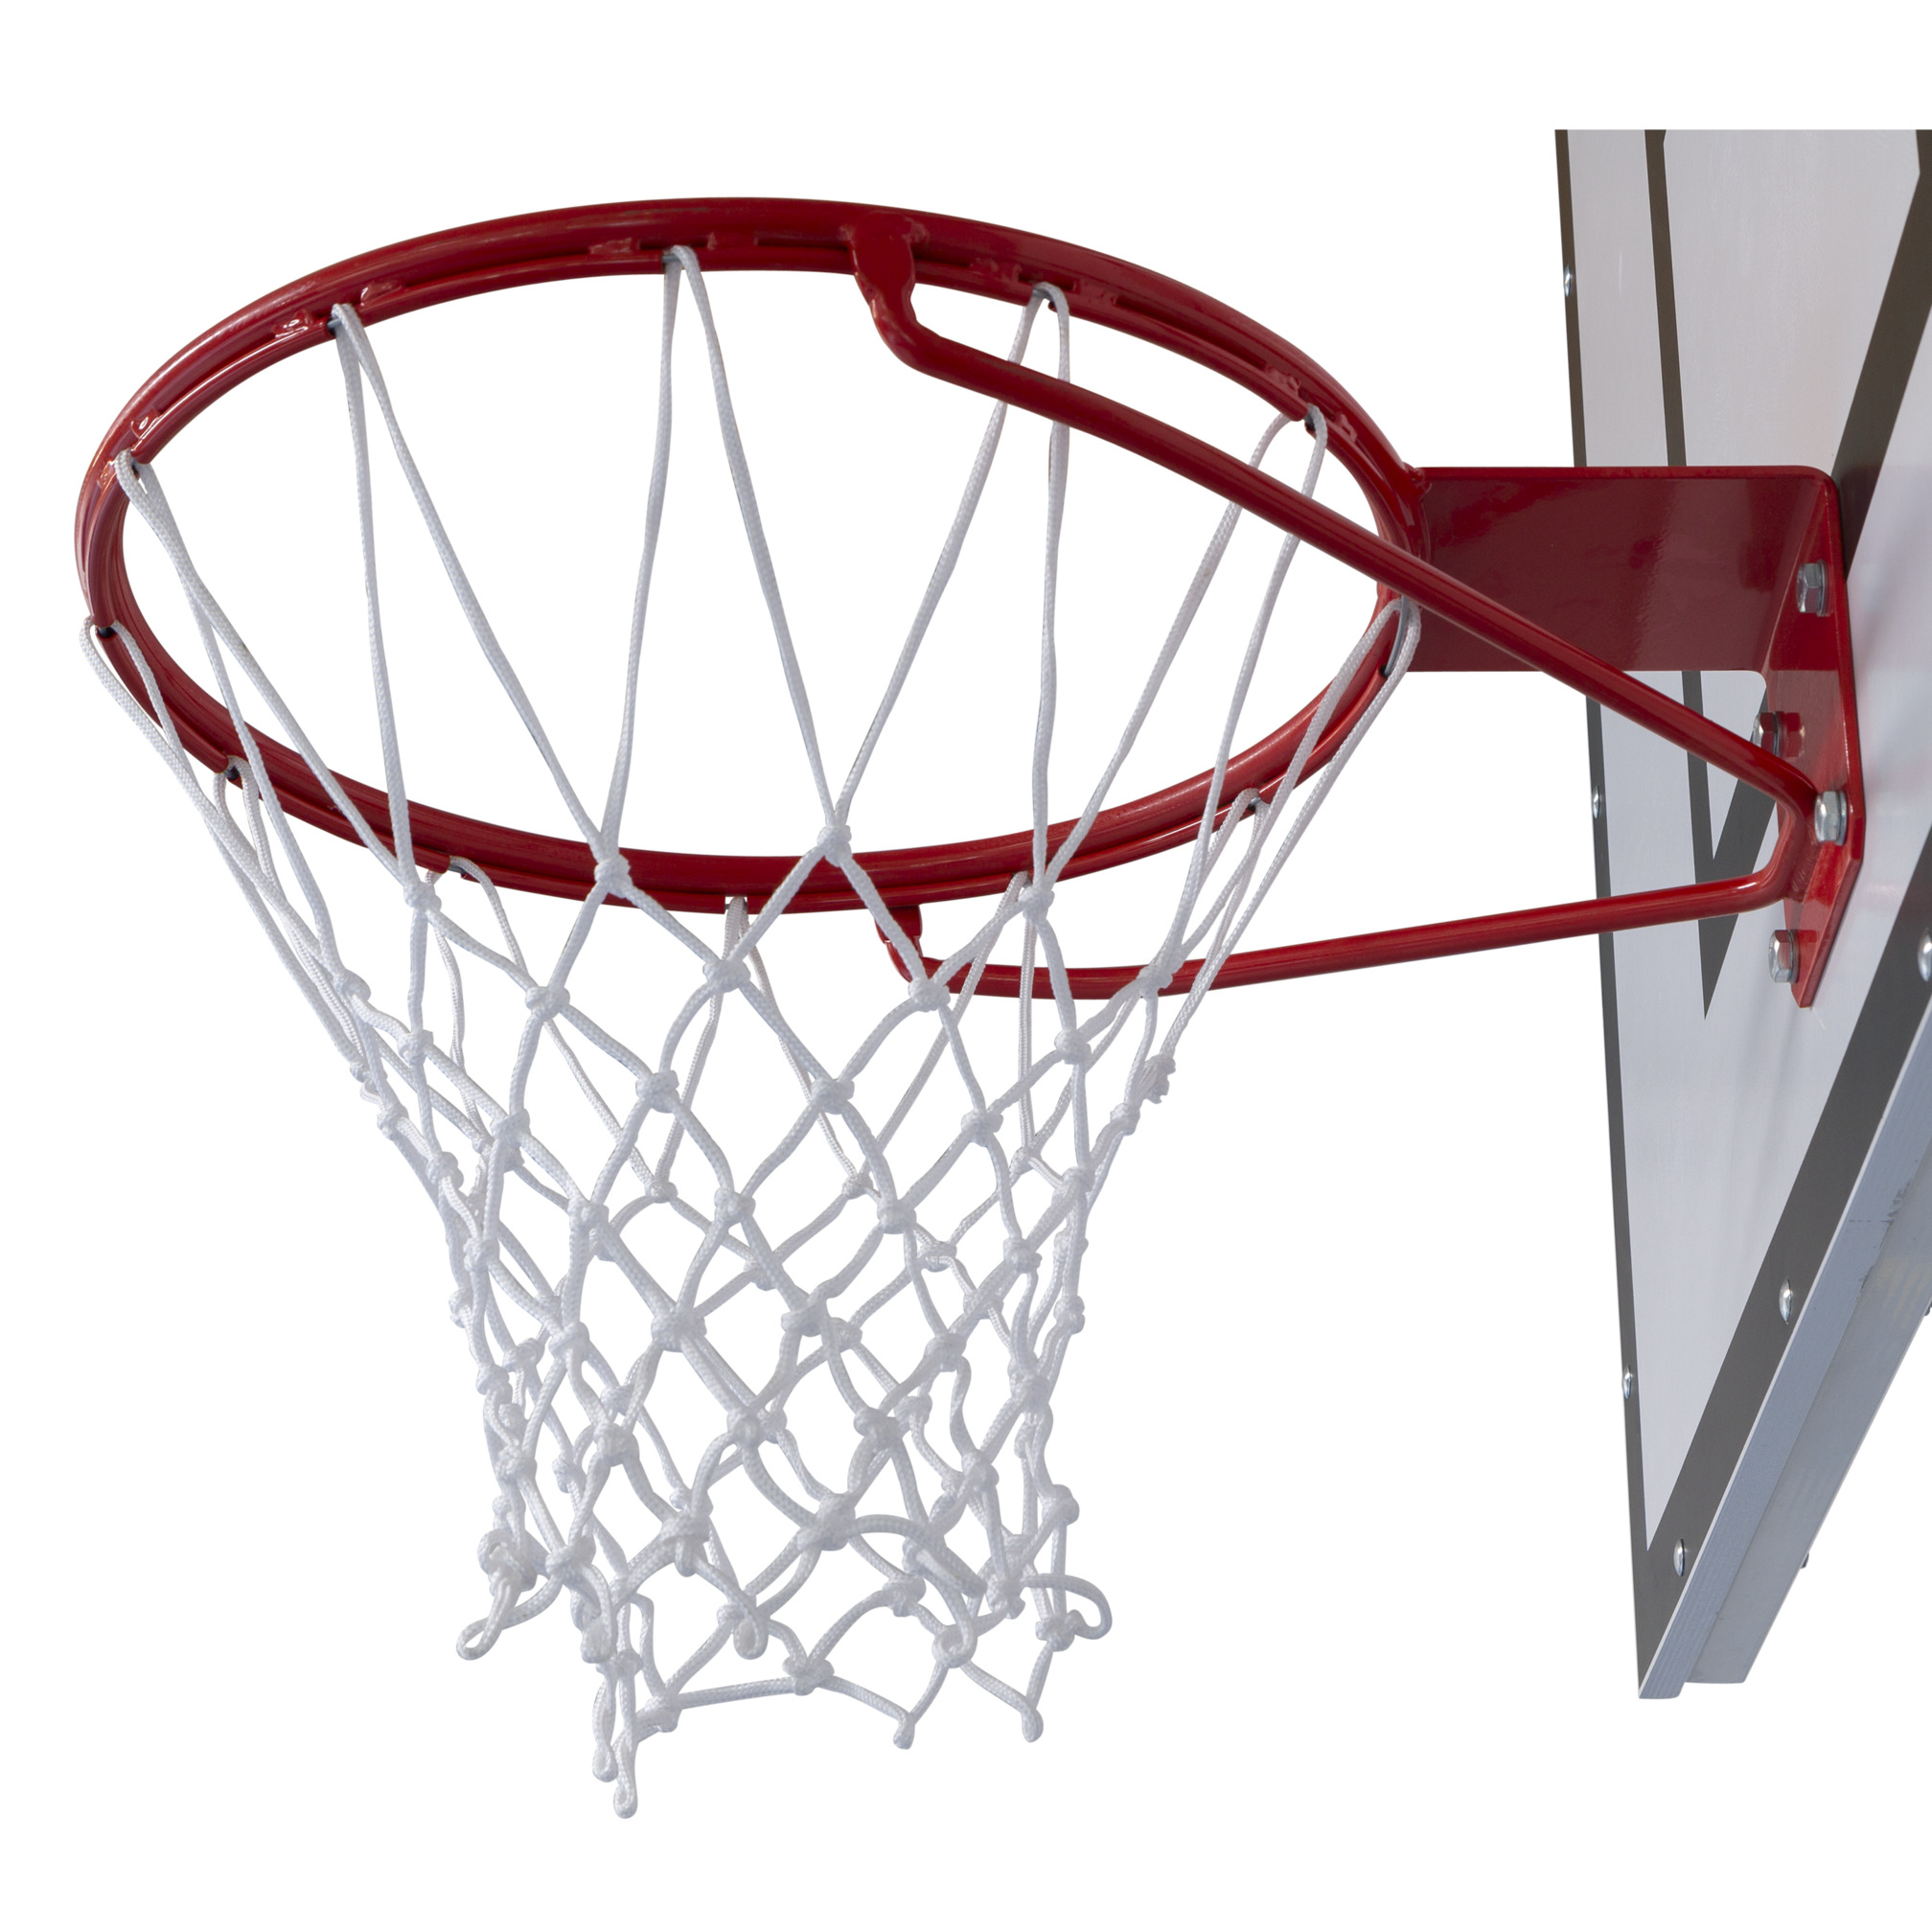 Basketball ring incl. net